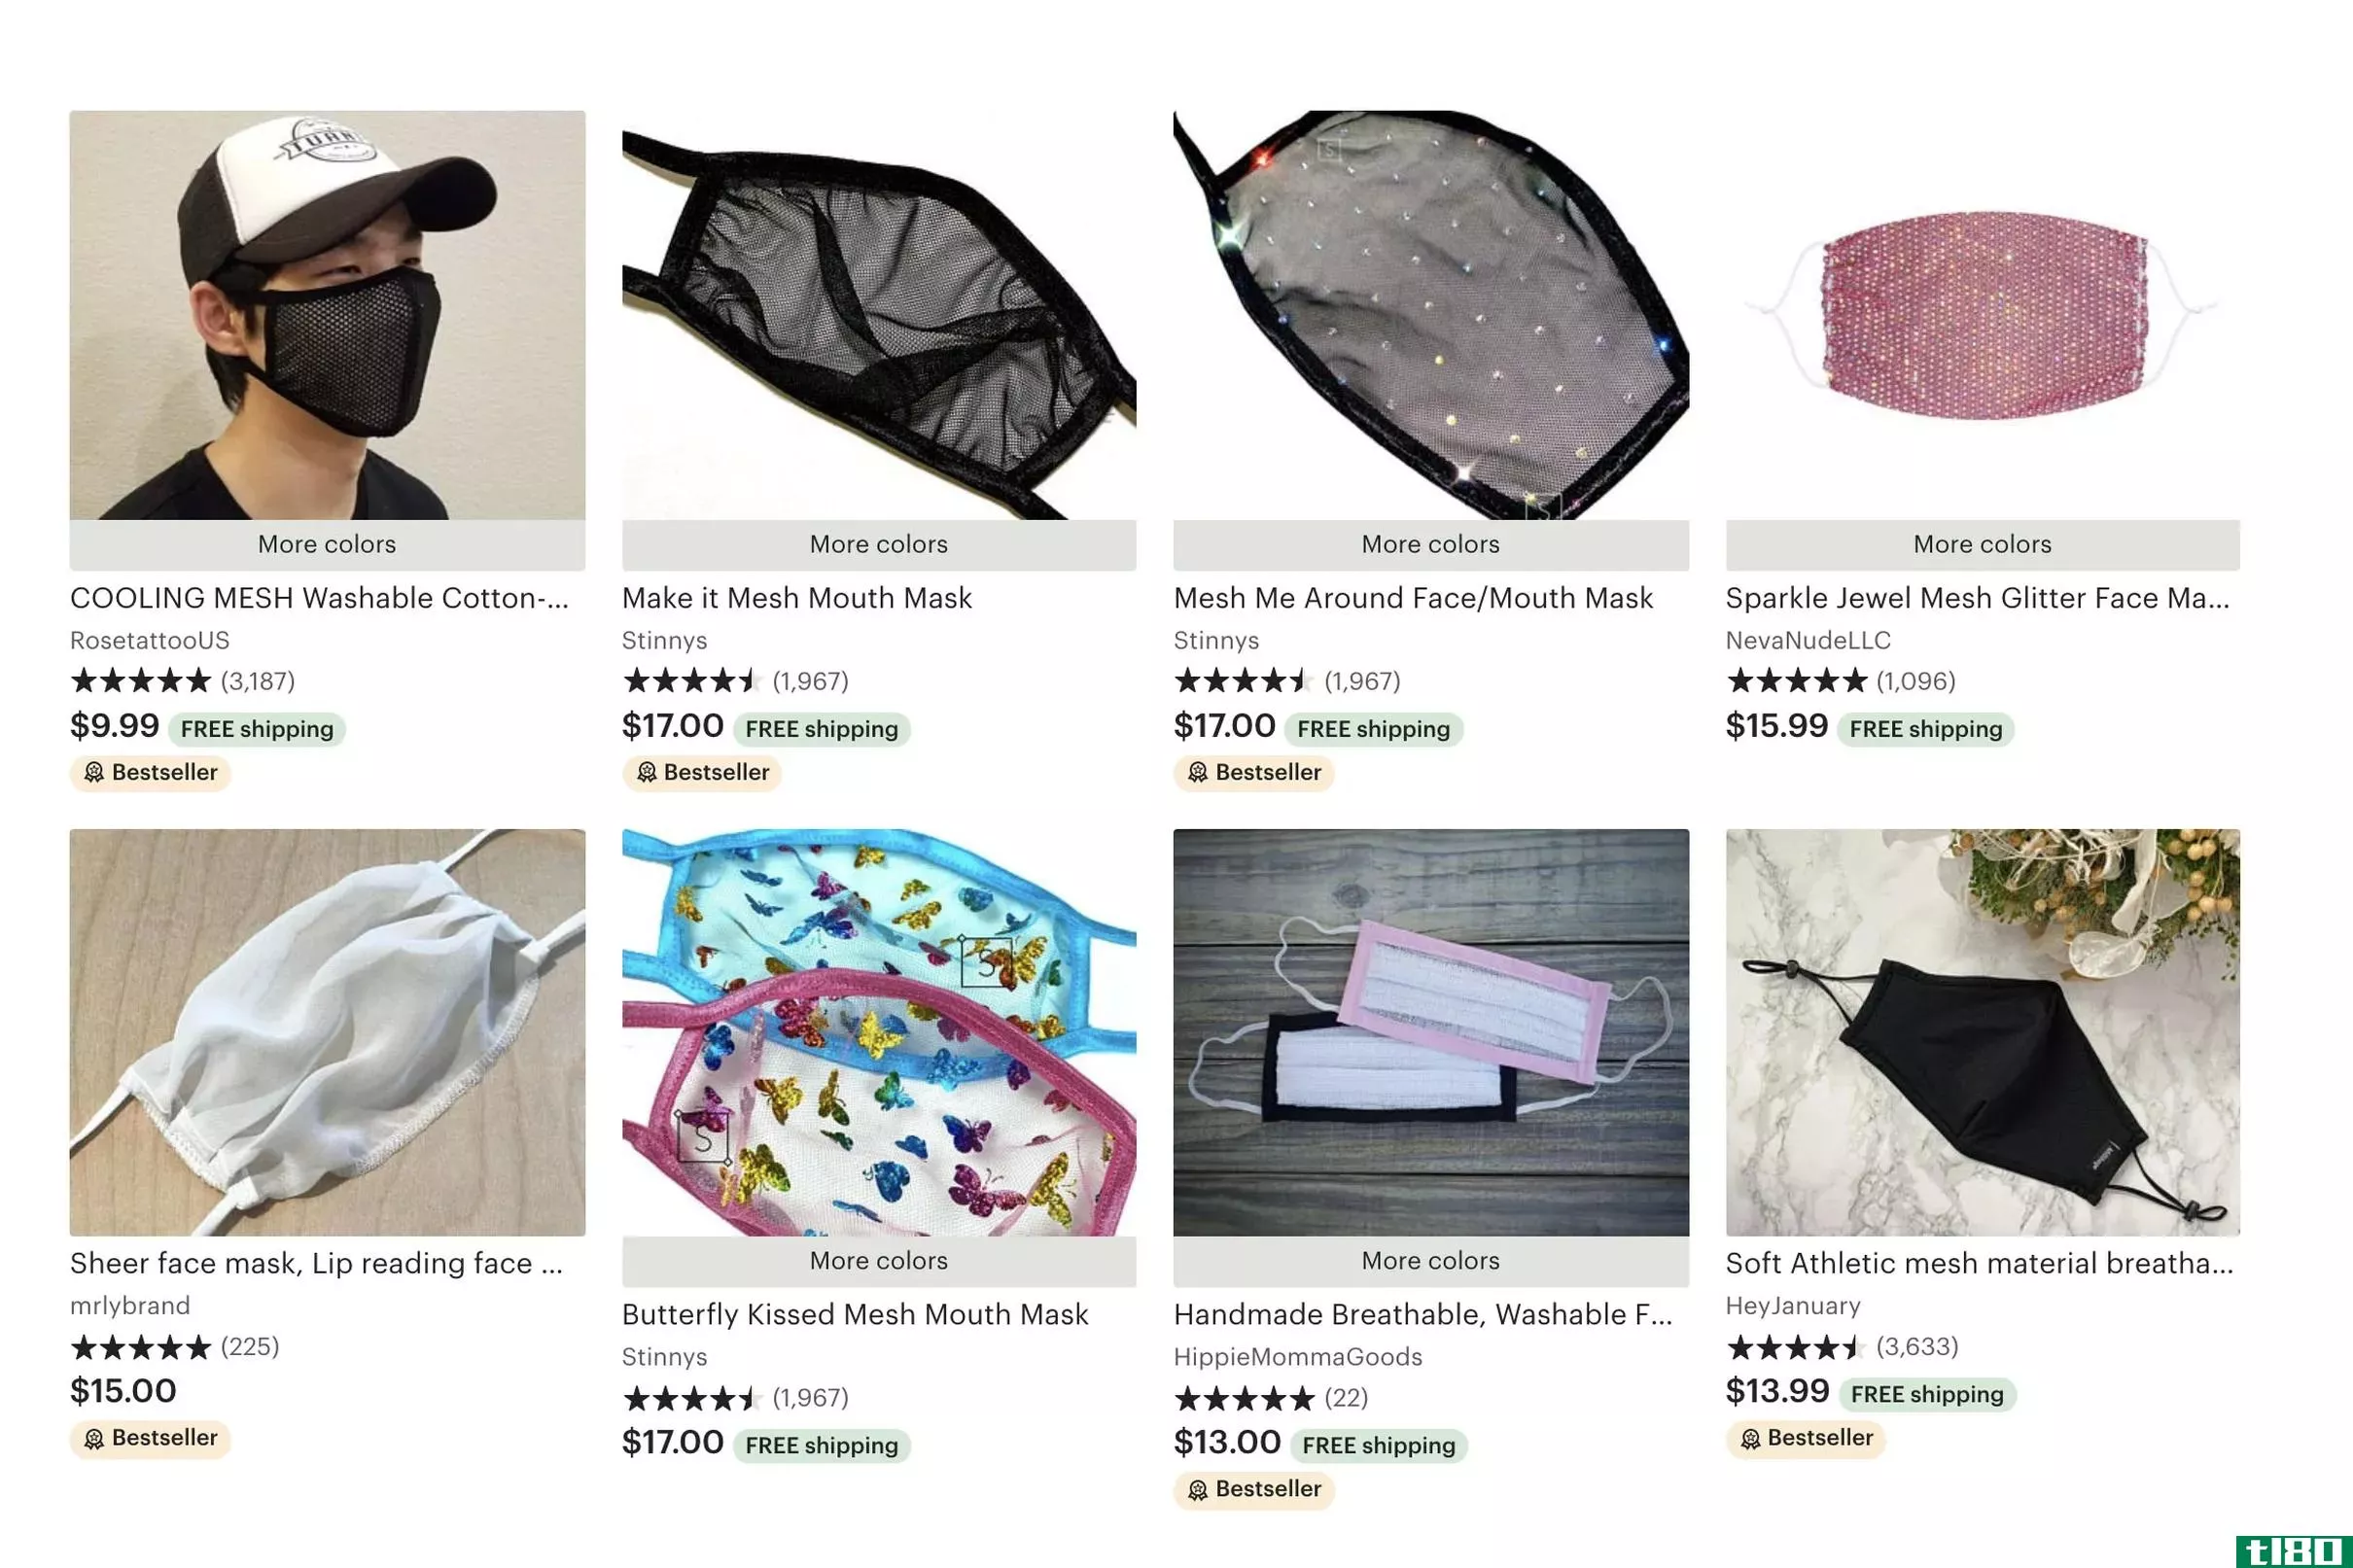 etsy销售商提供的纯网口罩提供“很少的保护”